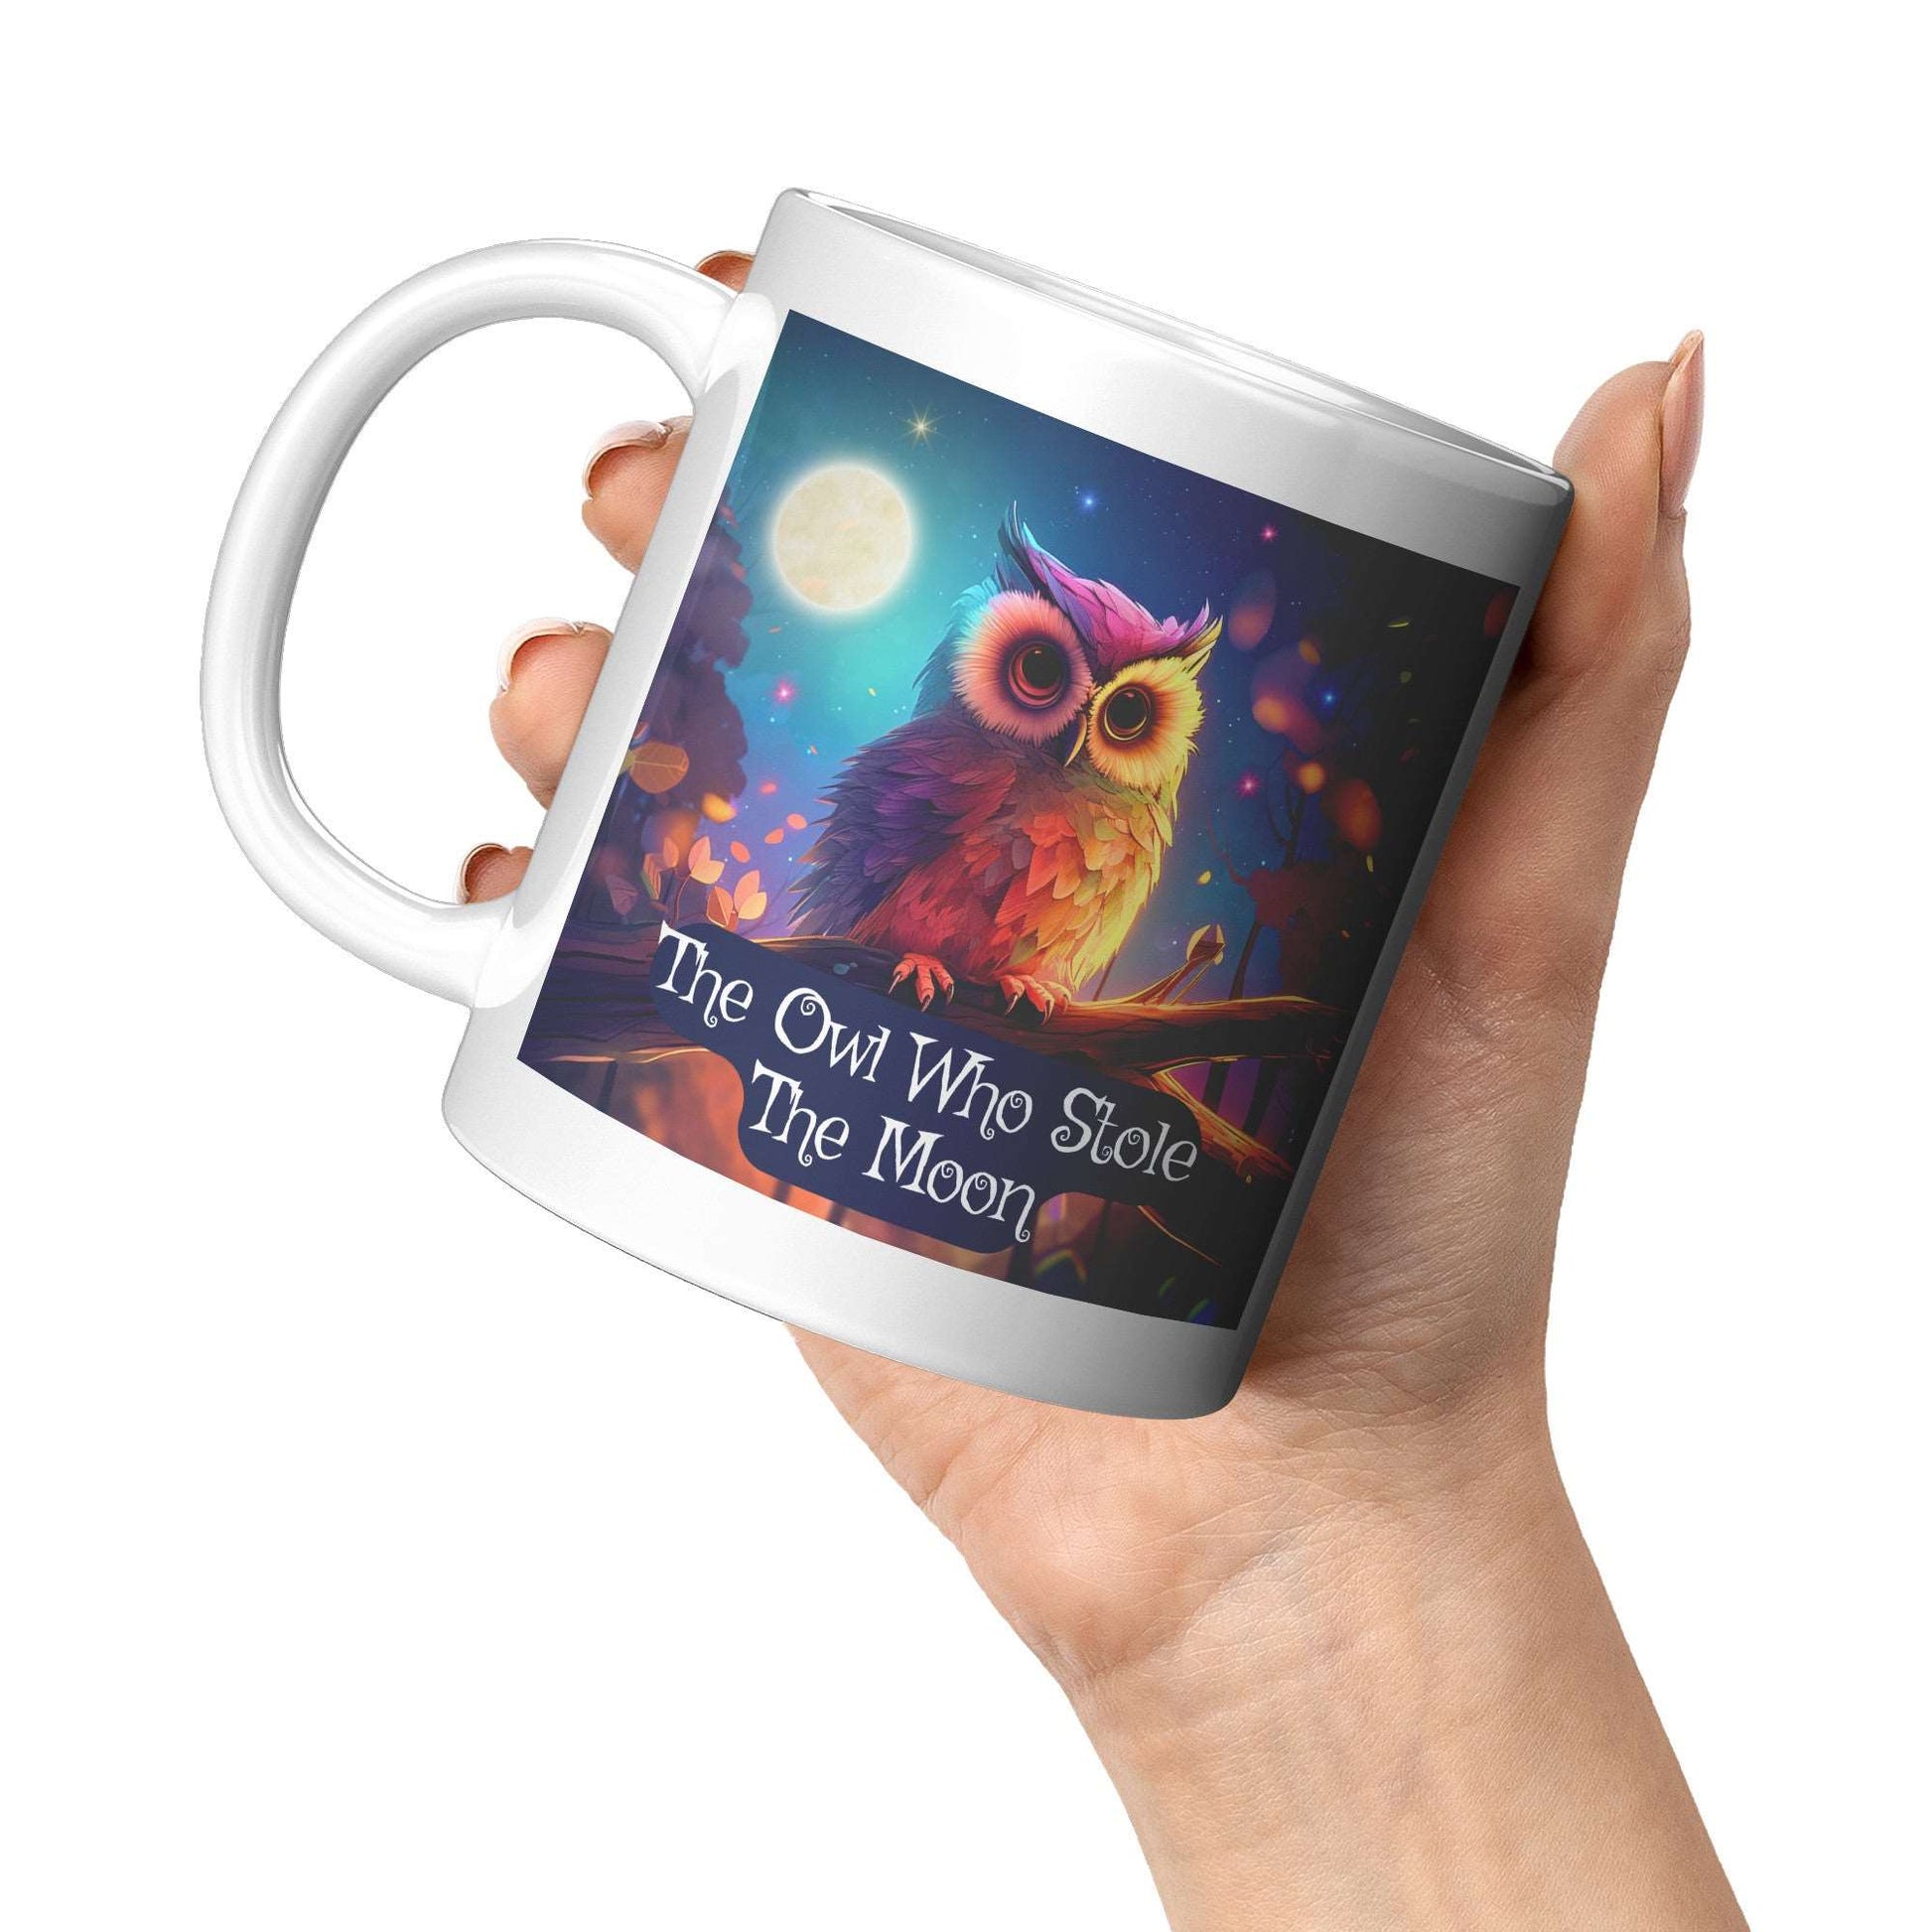 the Owl Who Stole the Moon -  mug 11oz